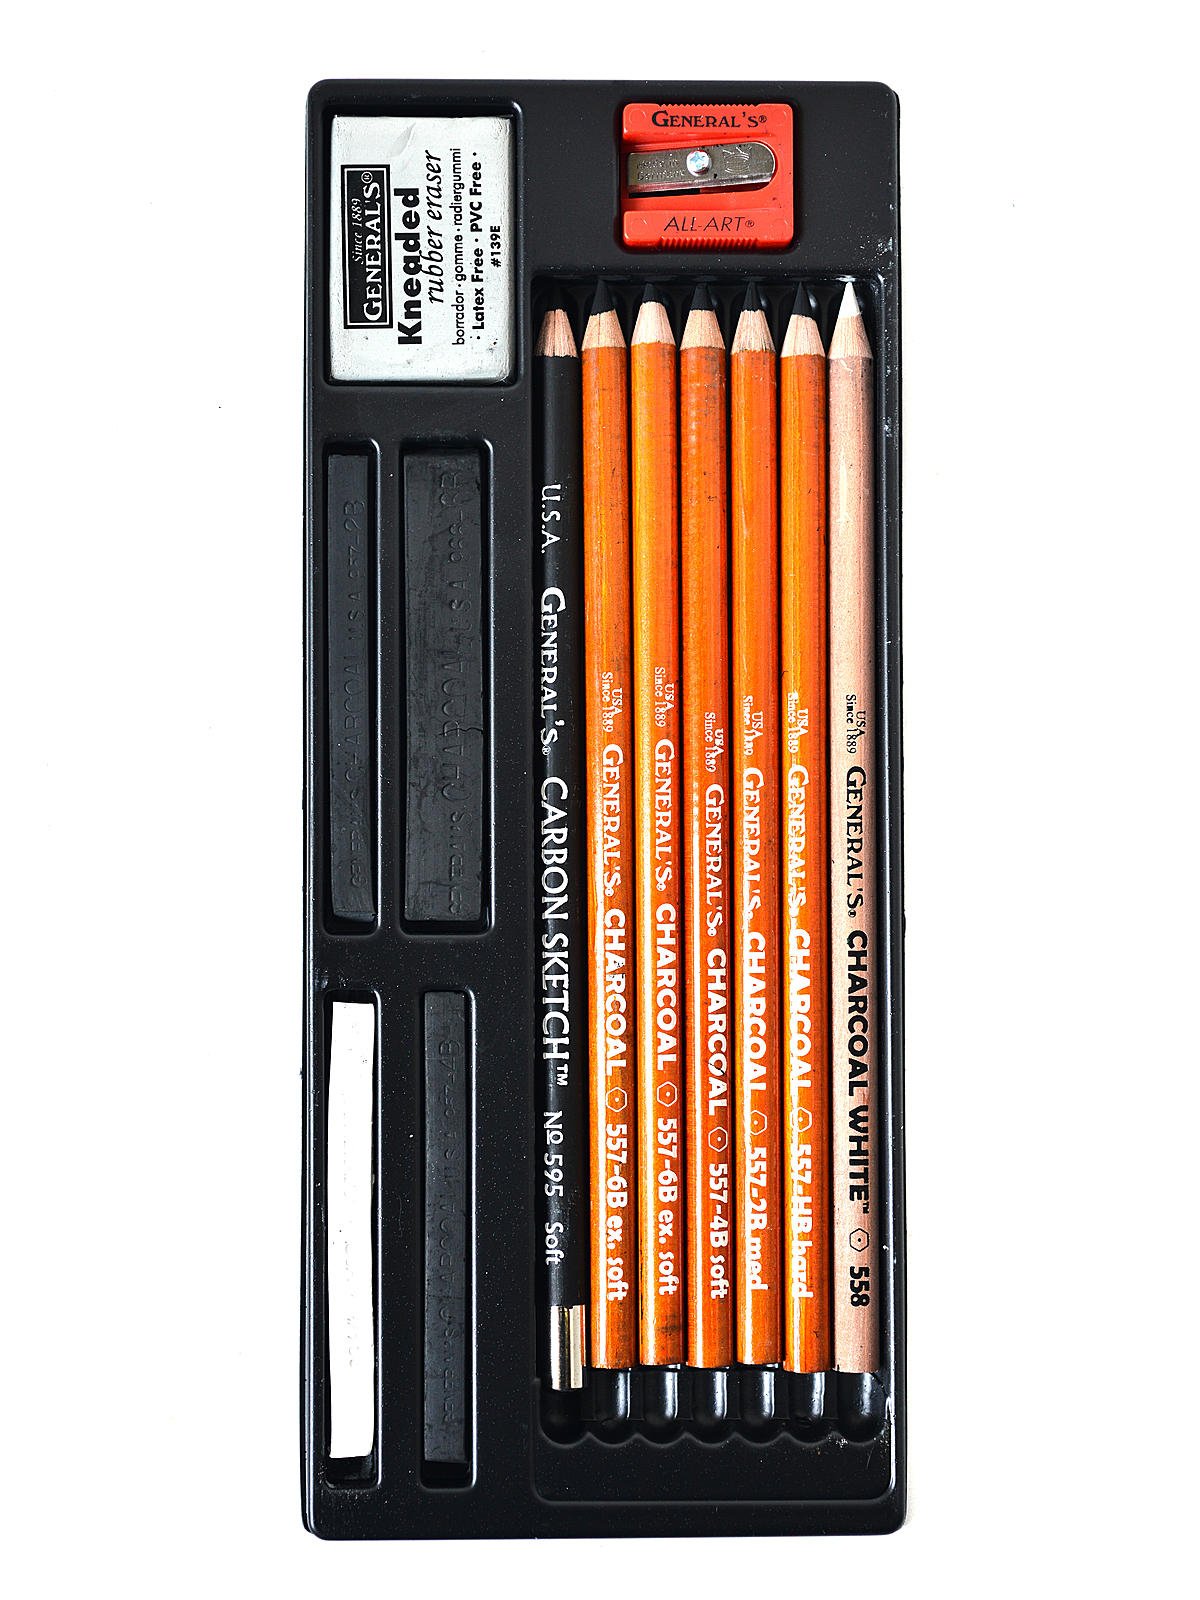 General's Charcoal Drawing Pencils Set